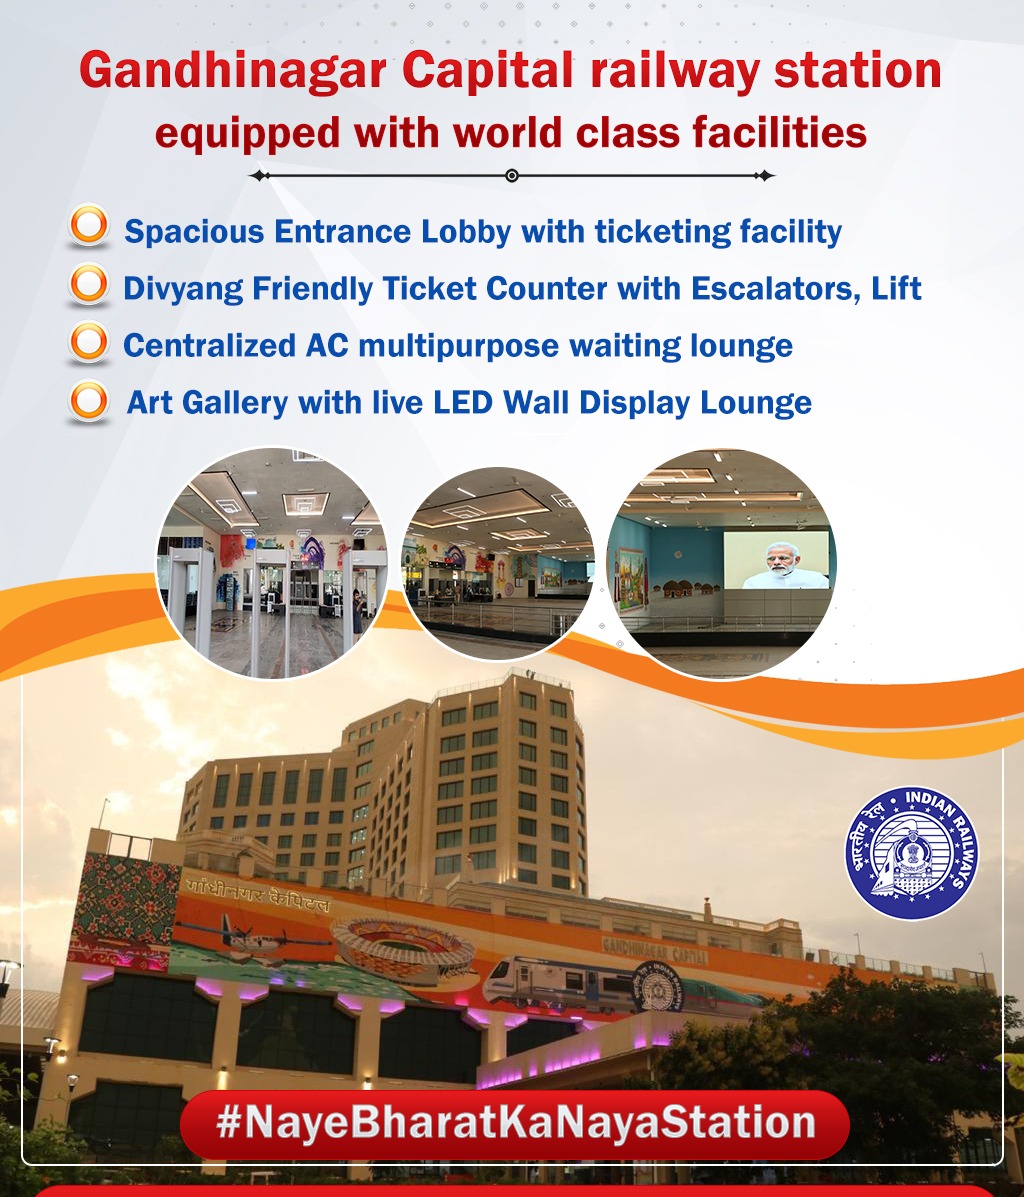 Railway station of your dreams! #Gandhinagar Capital station has world-class facilities & passenger amenities, keeping up with modern looks of the modern time. #NayeBharatKaNayaStation